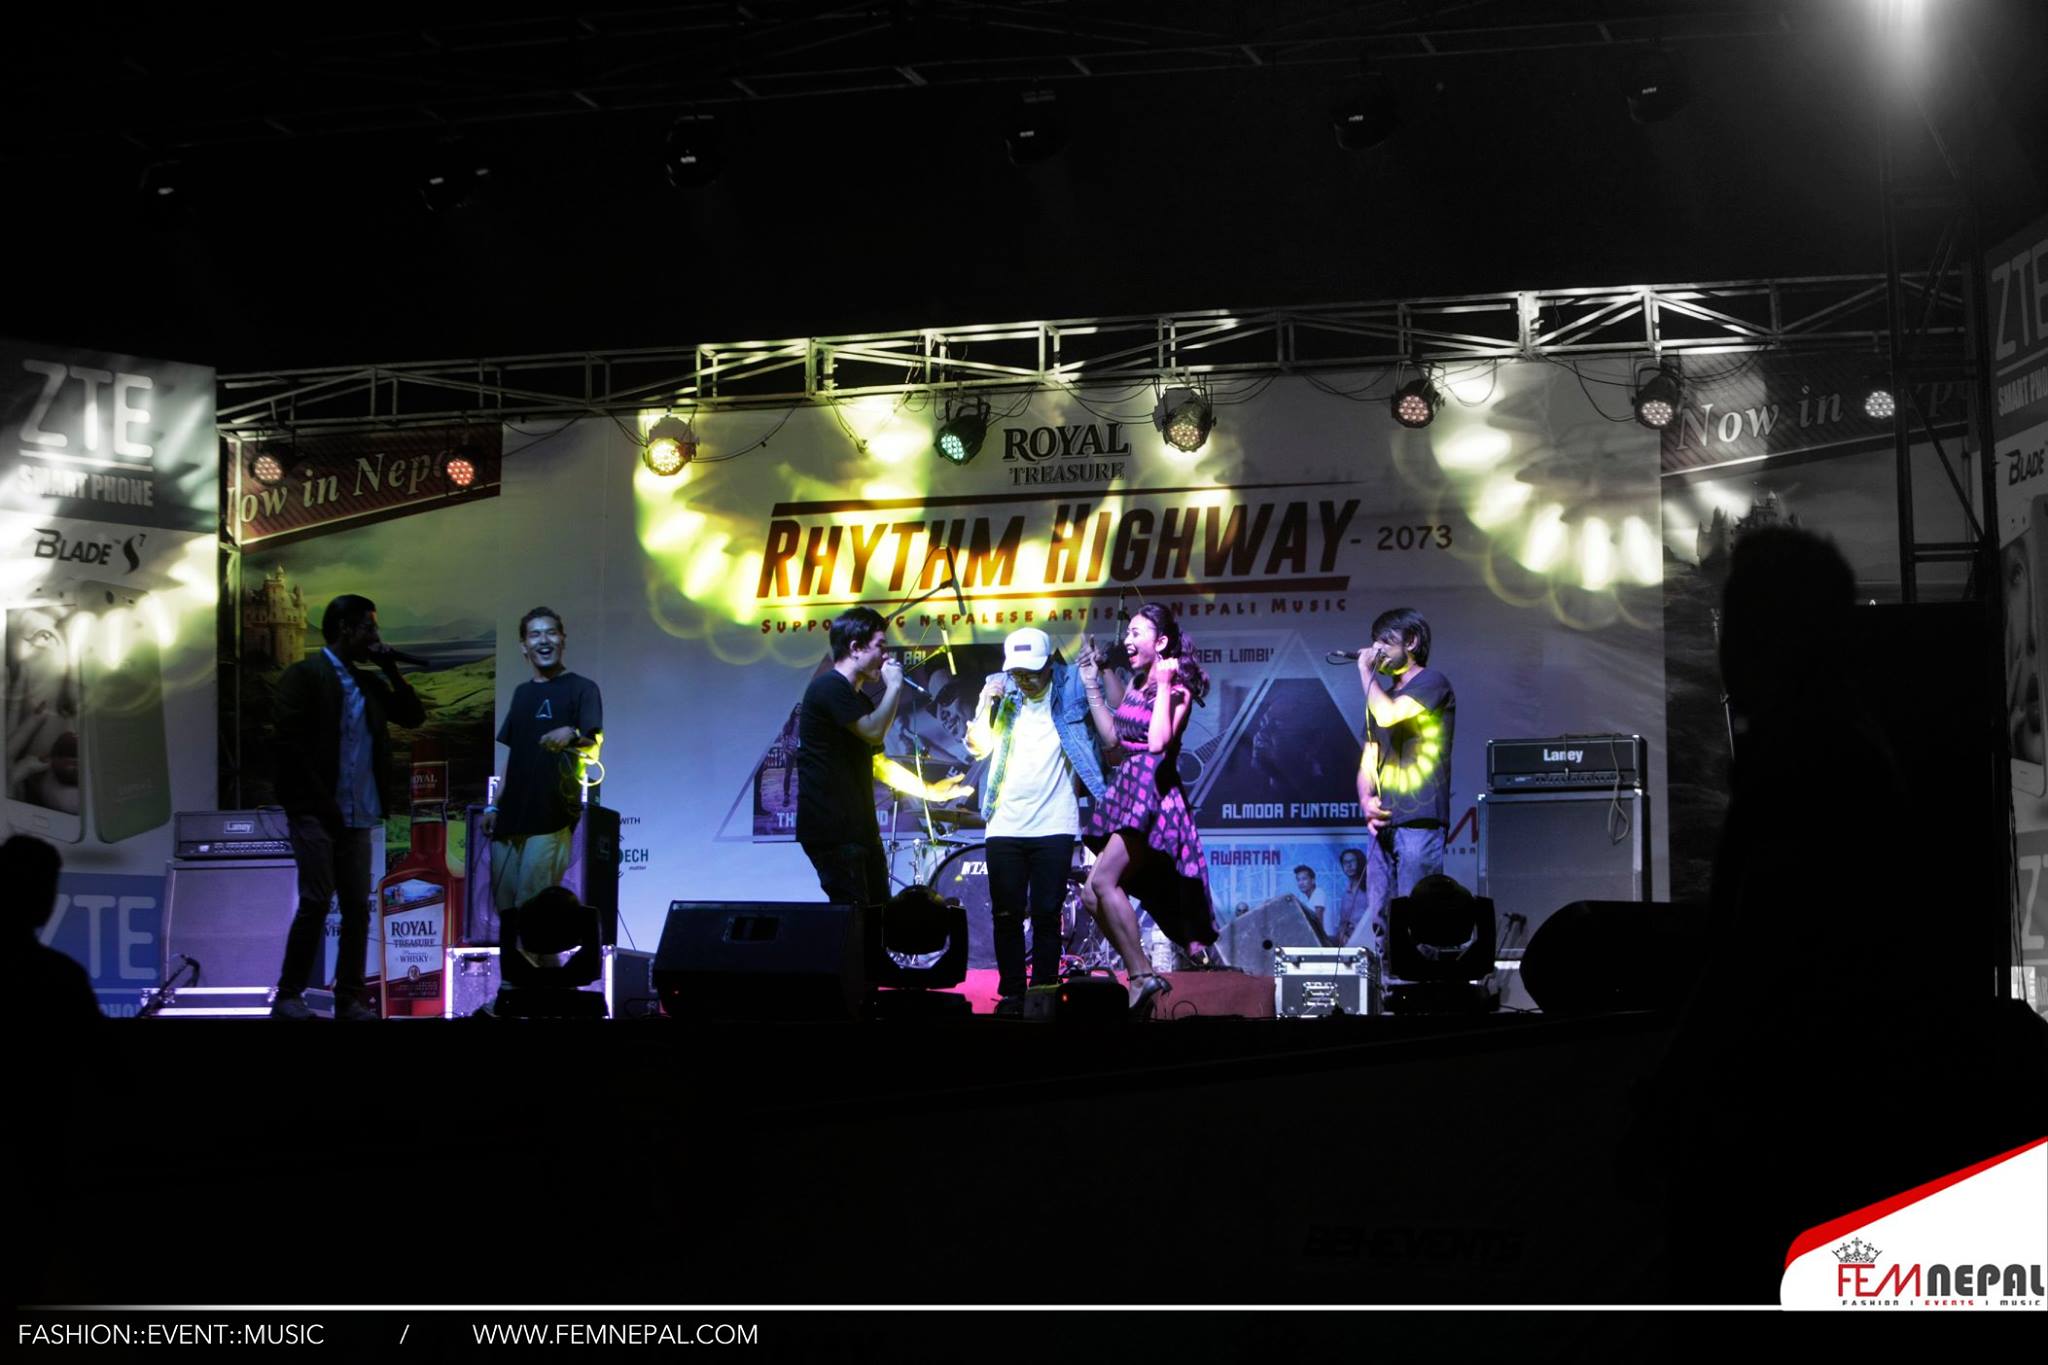 B-8eight Live performance at Rhythm Highway event by Fem Nepal